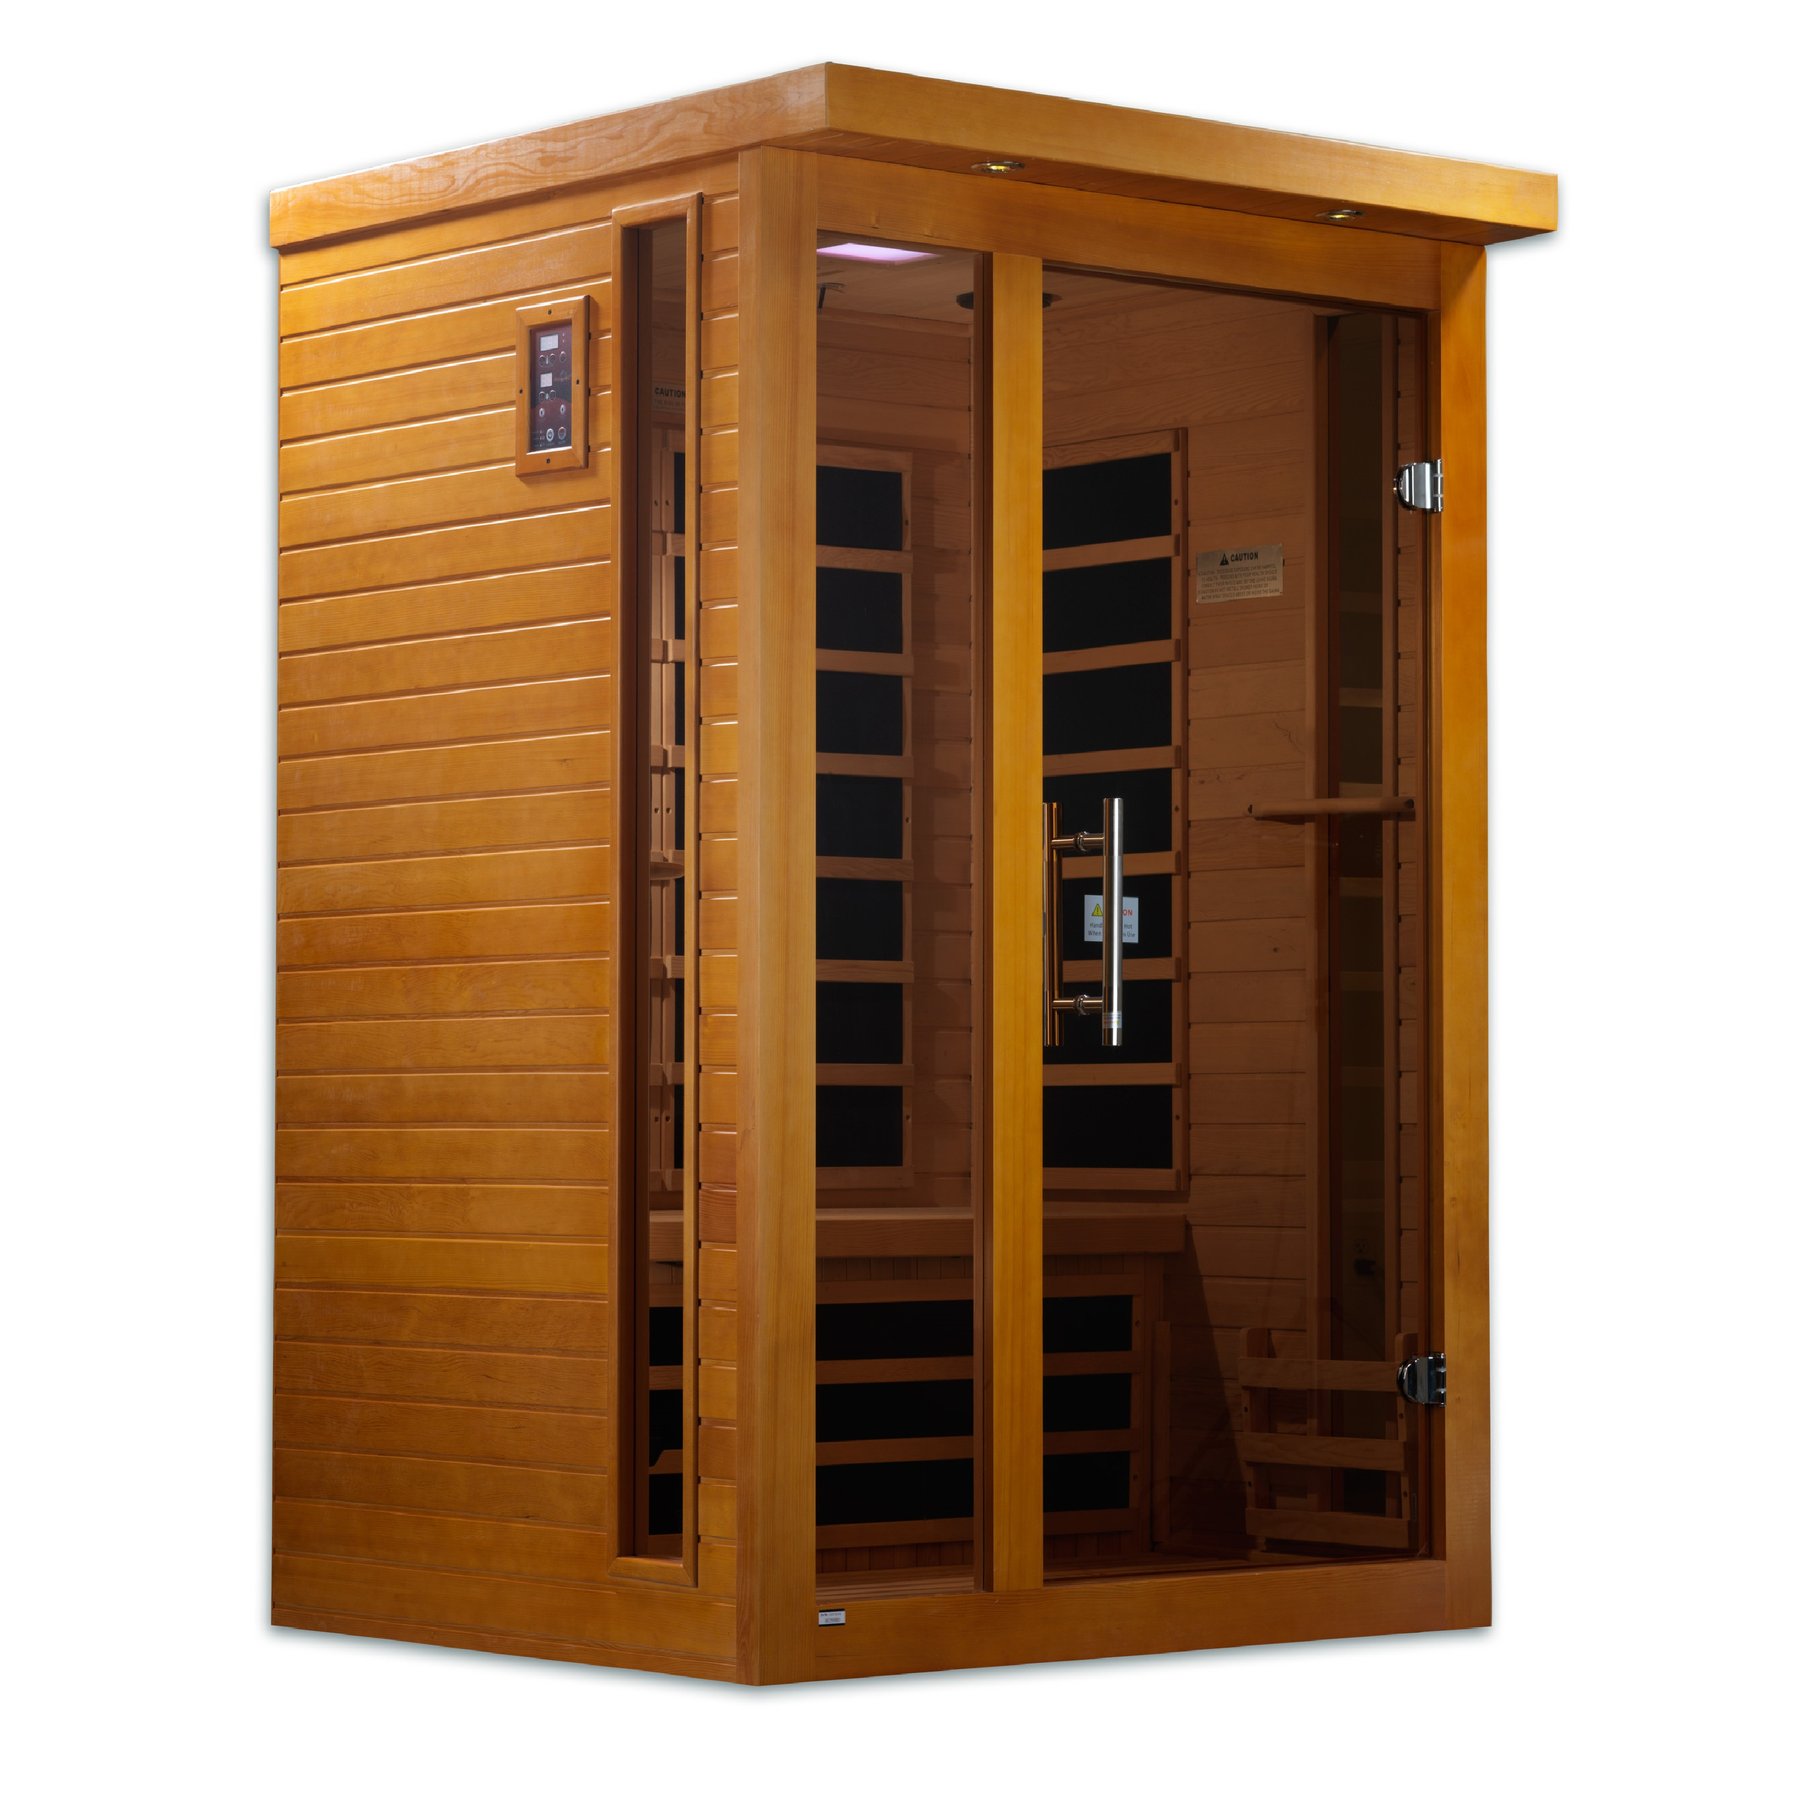  Economical Infrared Saunas: Infrared Sauna Health Benefits thumbnail